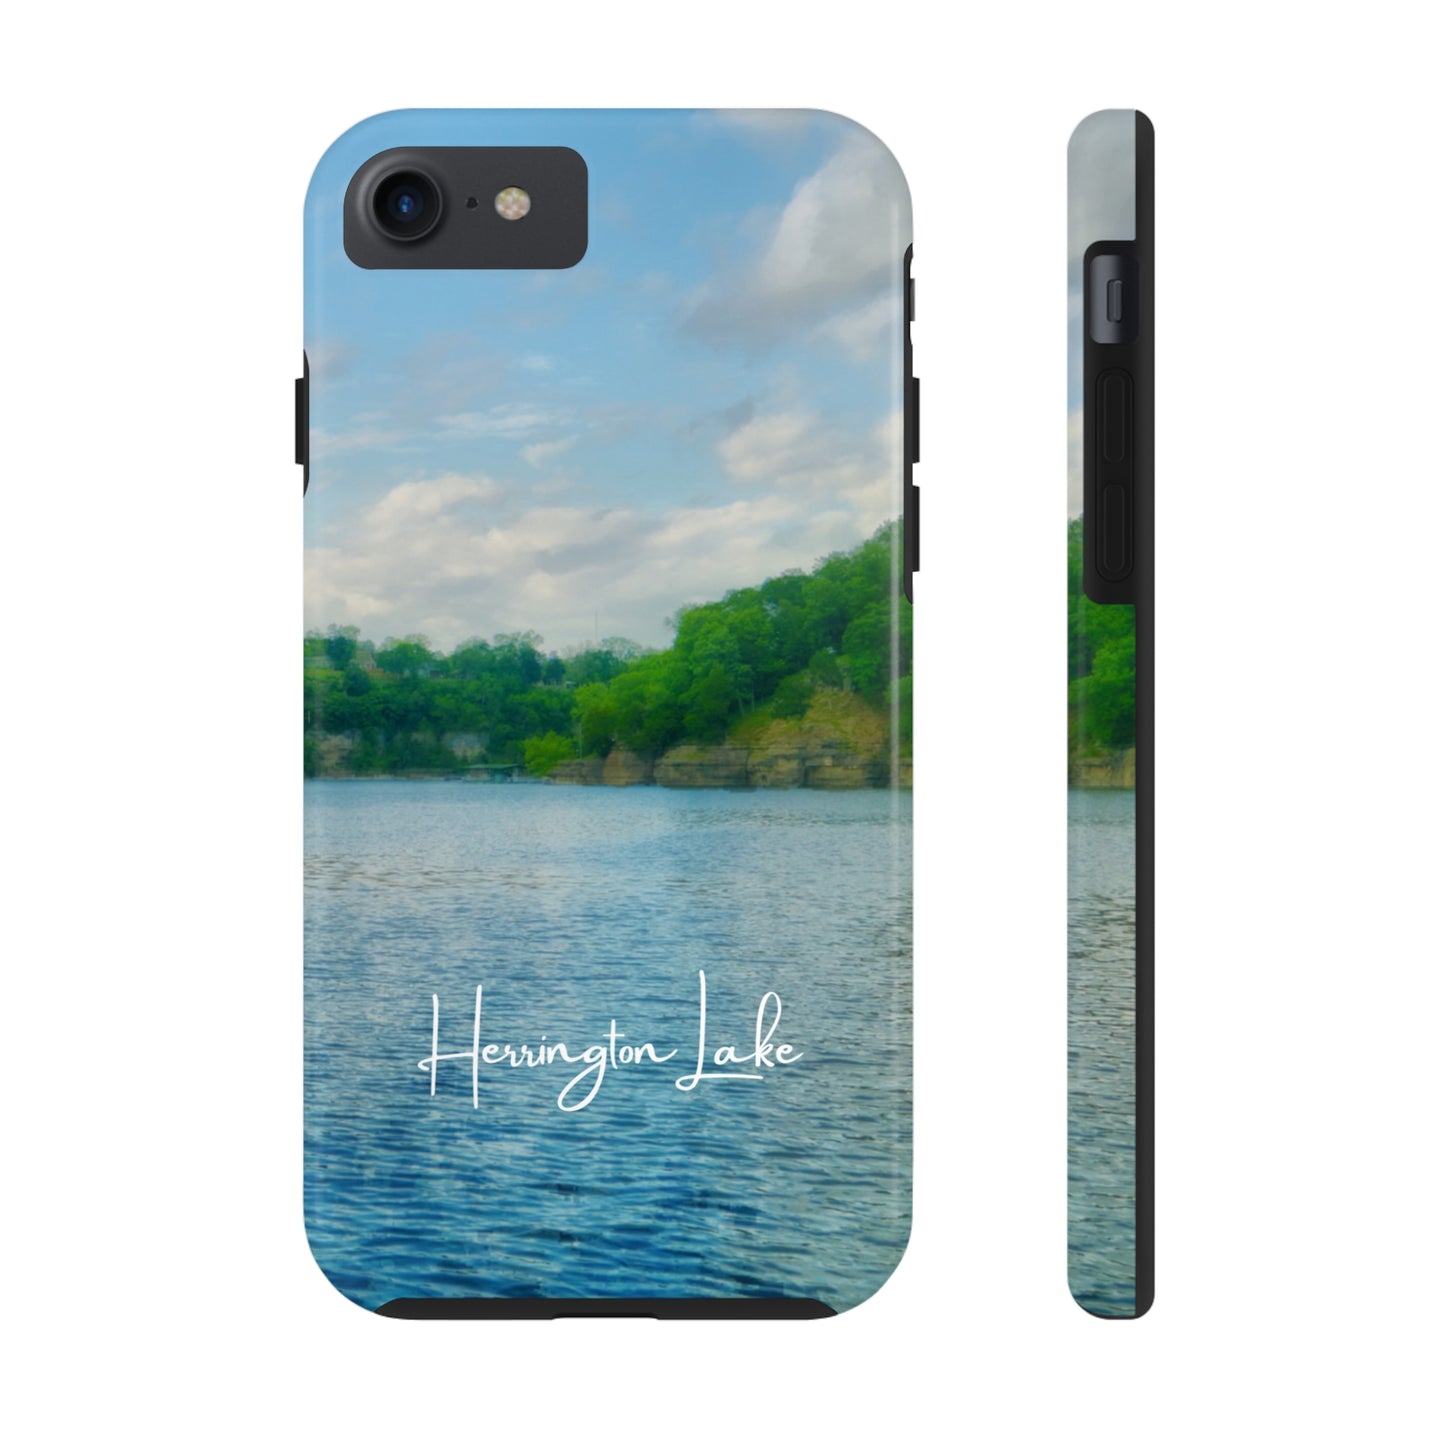 Herrington Lake "Lake Vista" Tough Phone Cases